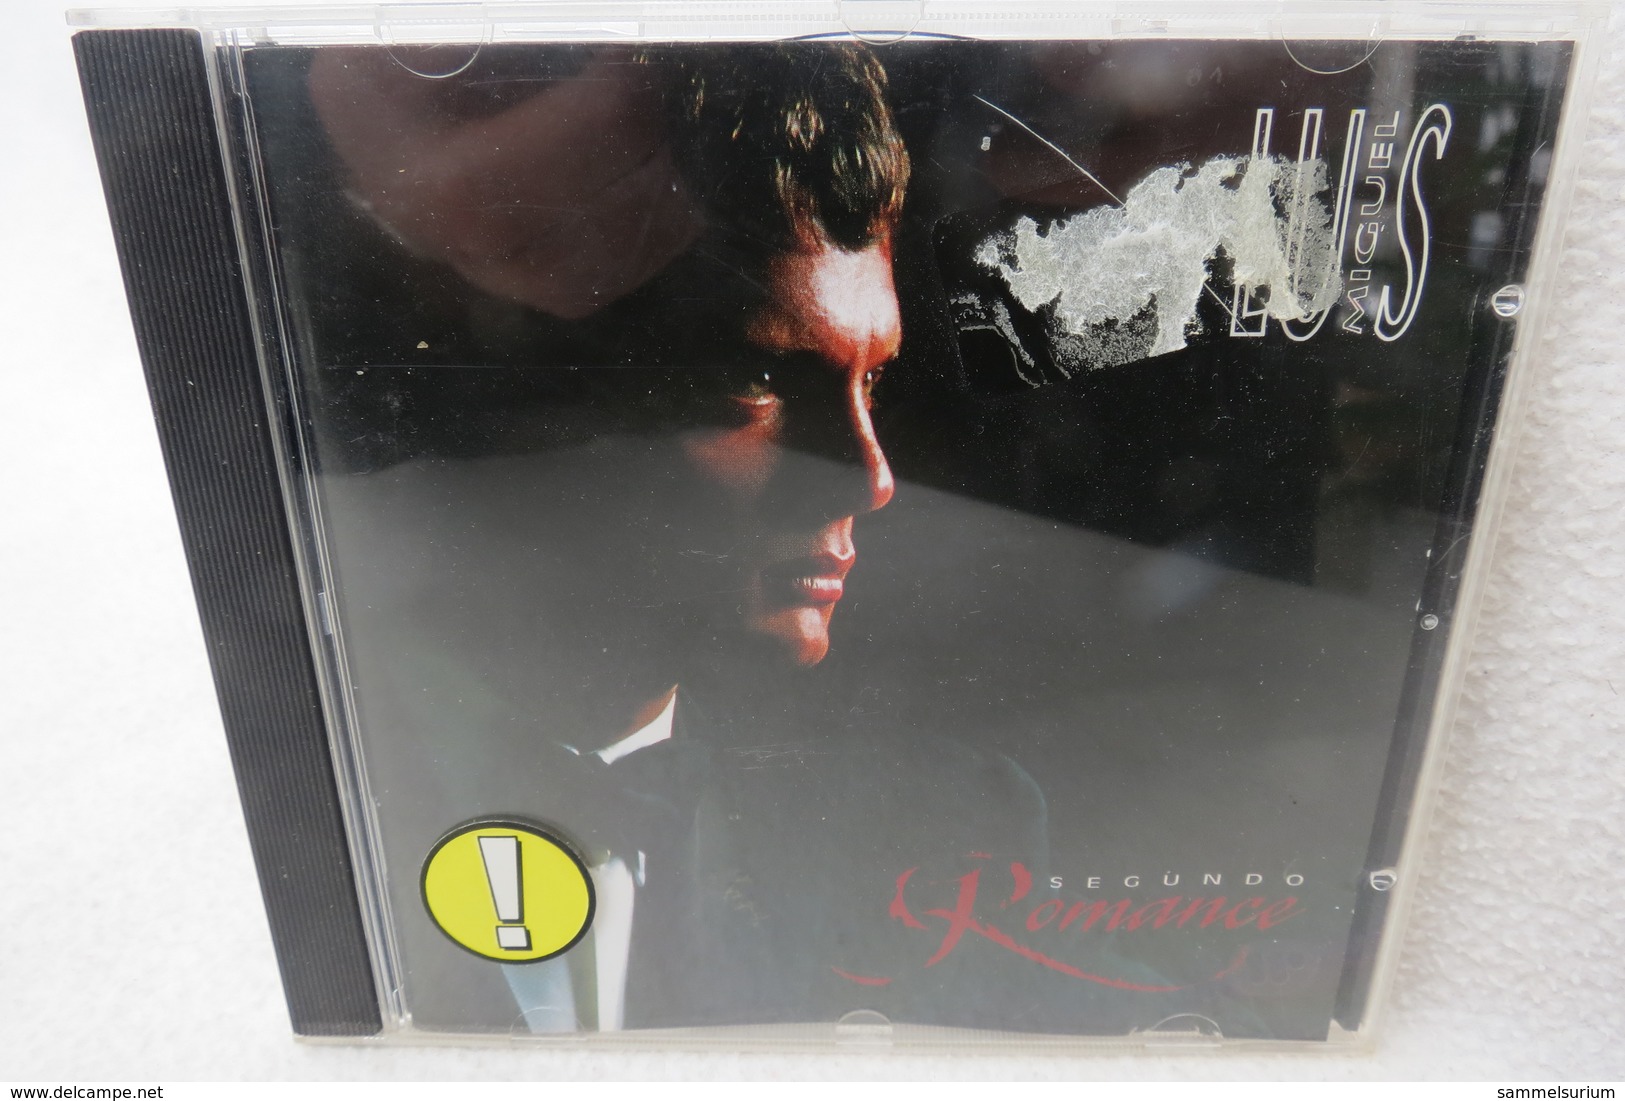 CD "Luis Miguel" Segundo Romance - World Music